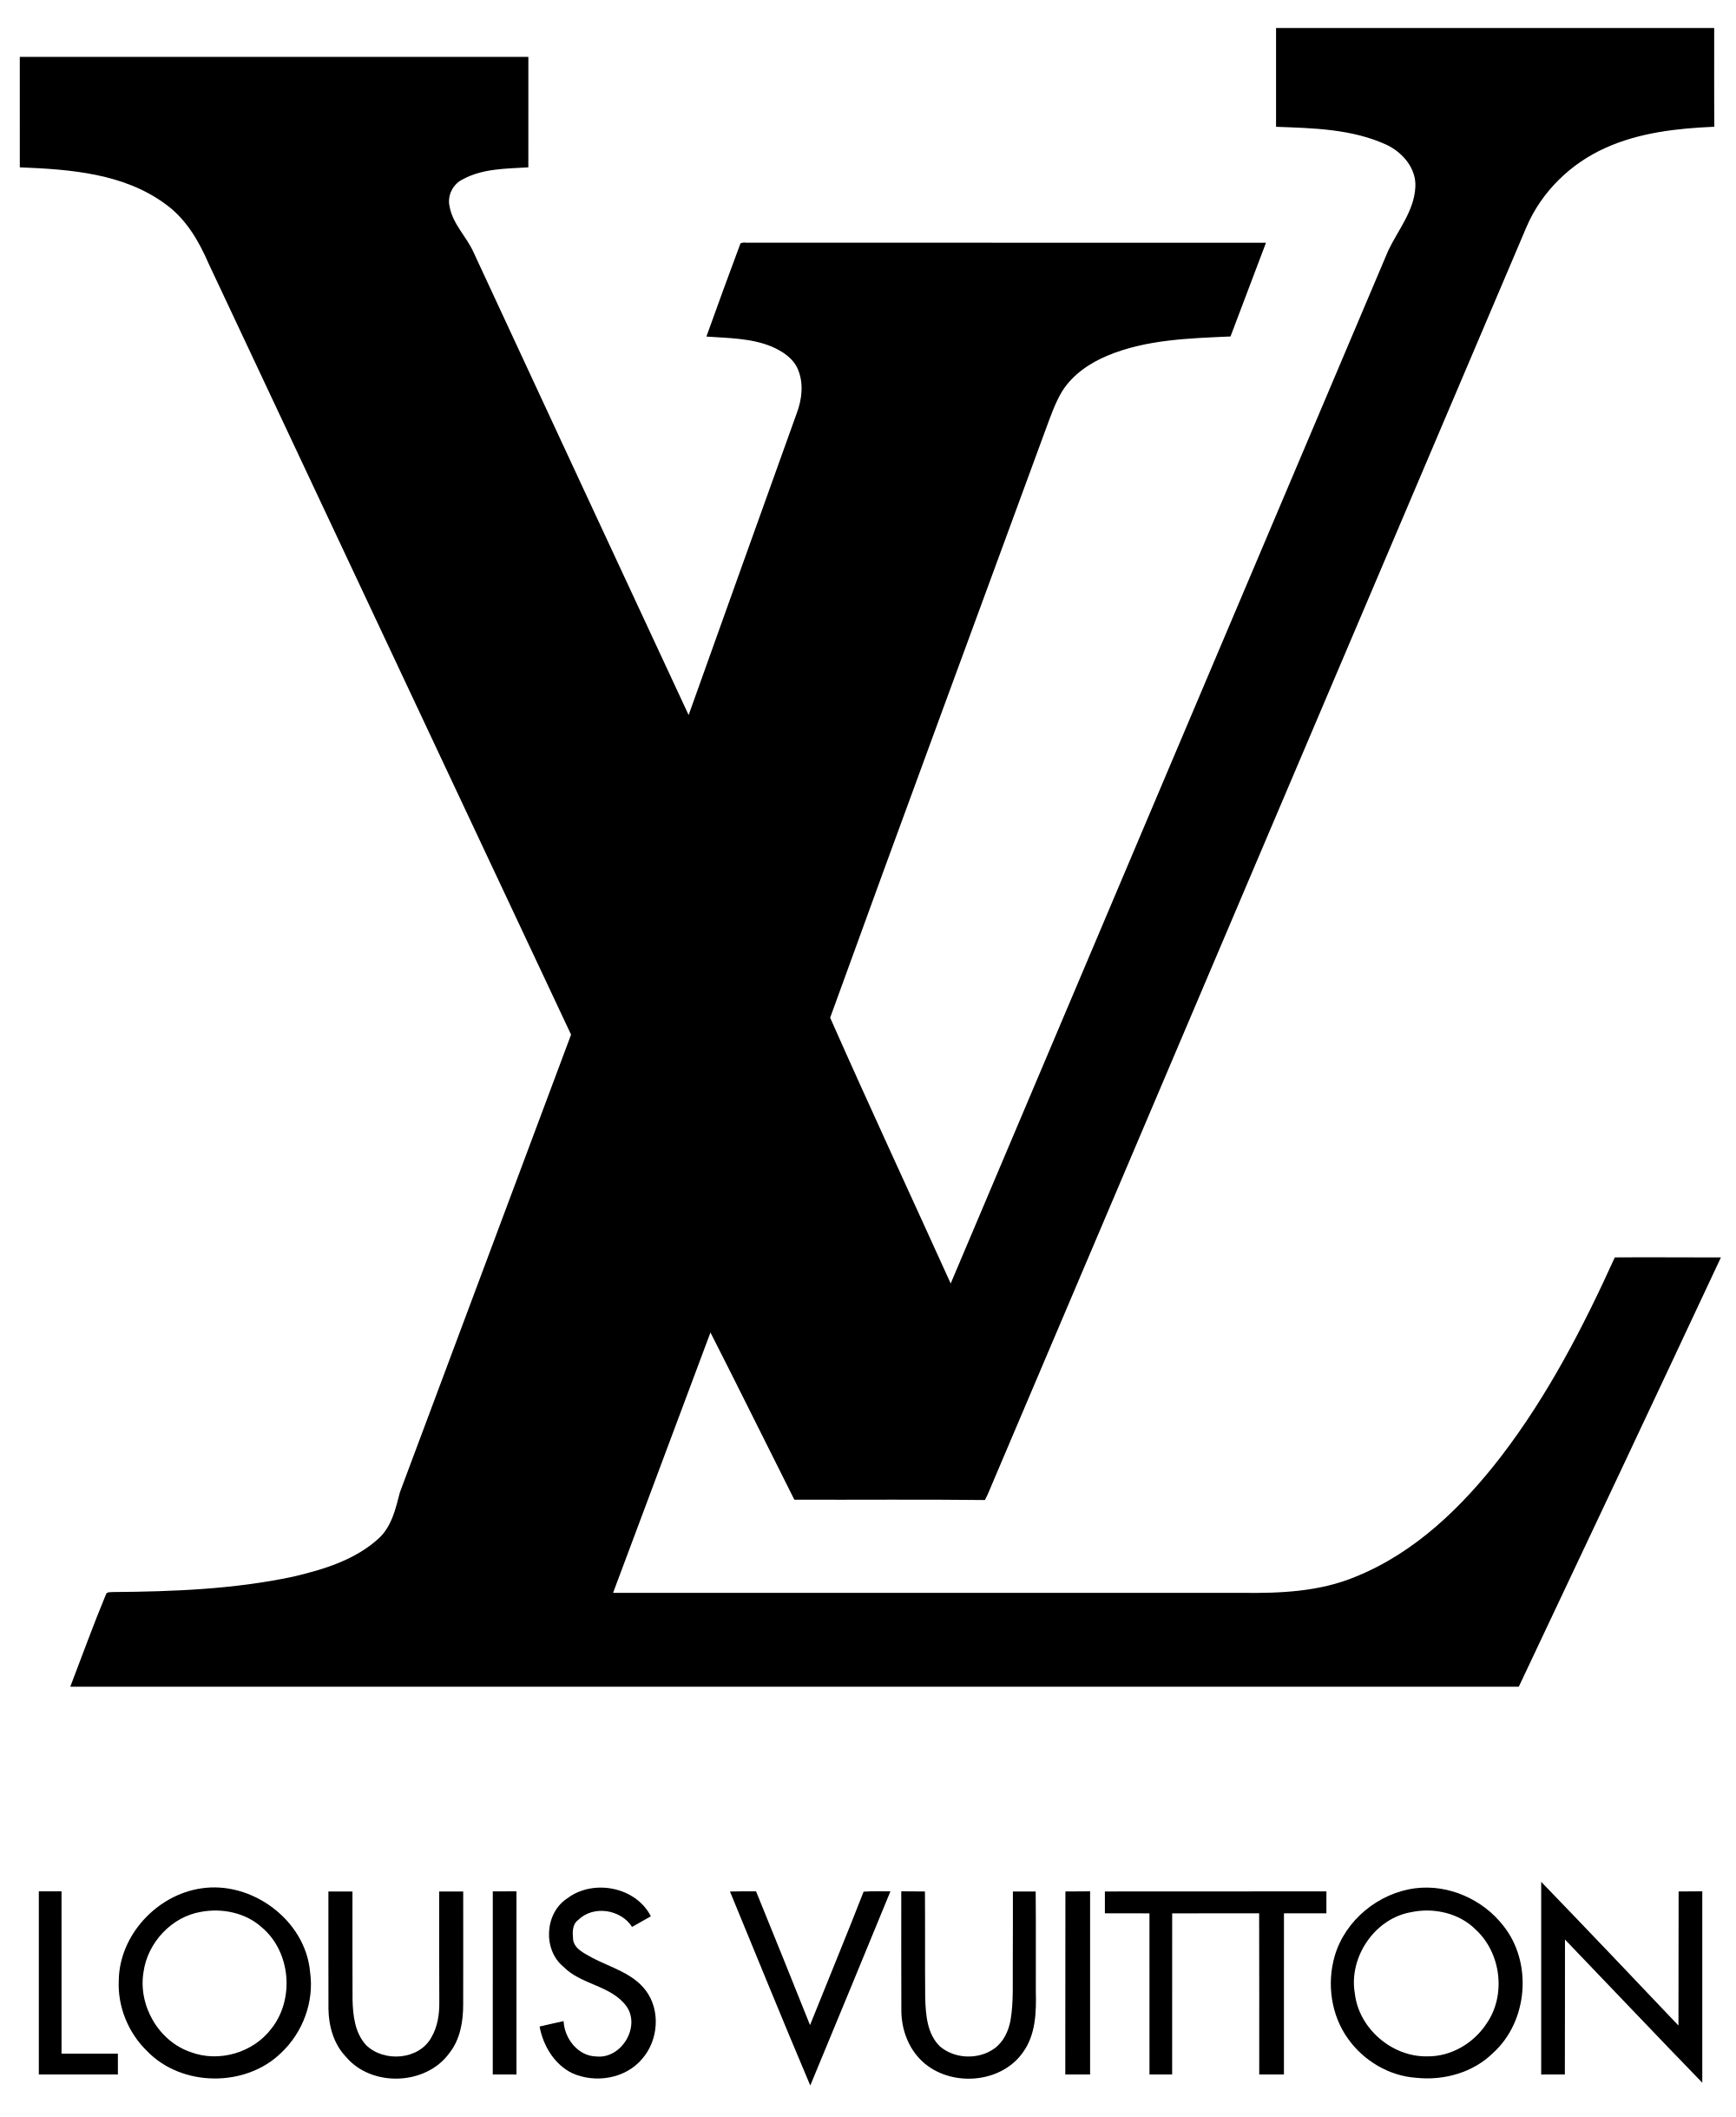 Louis Vuitton White Logo - File:Louis Vuitton logo and wordmark.svg - Wikimedia Commons